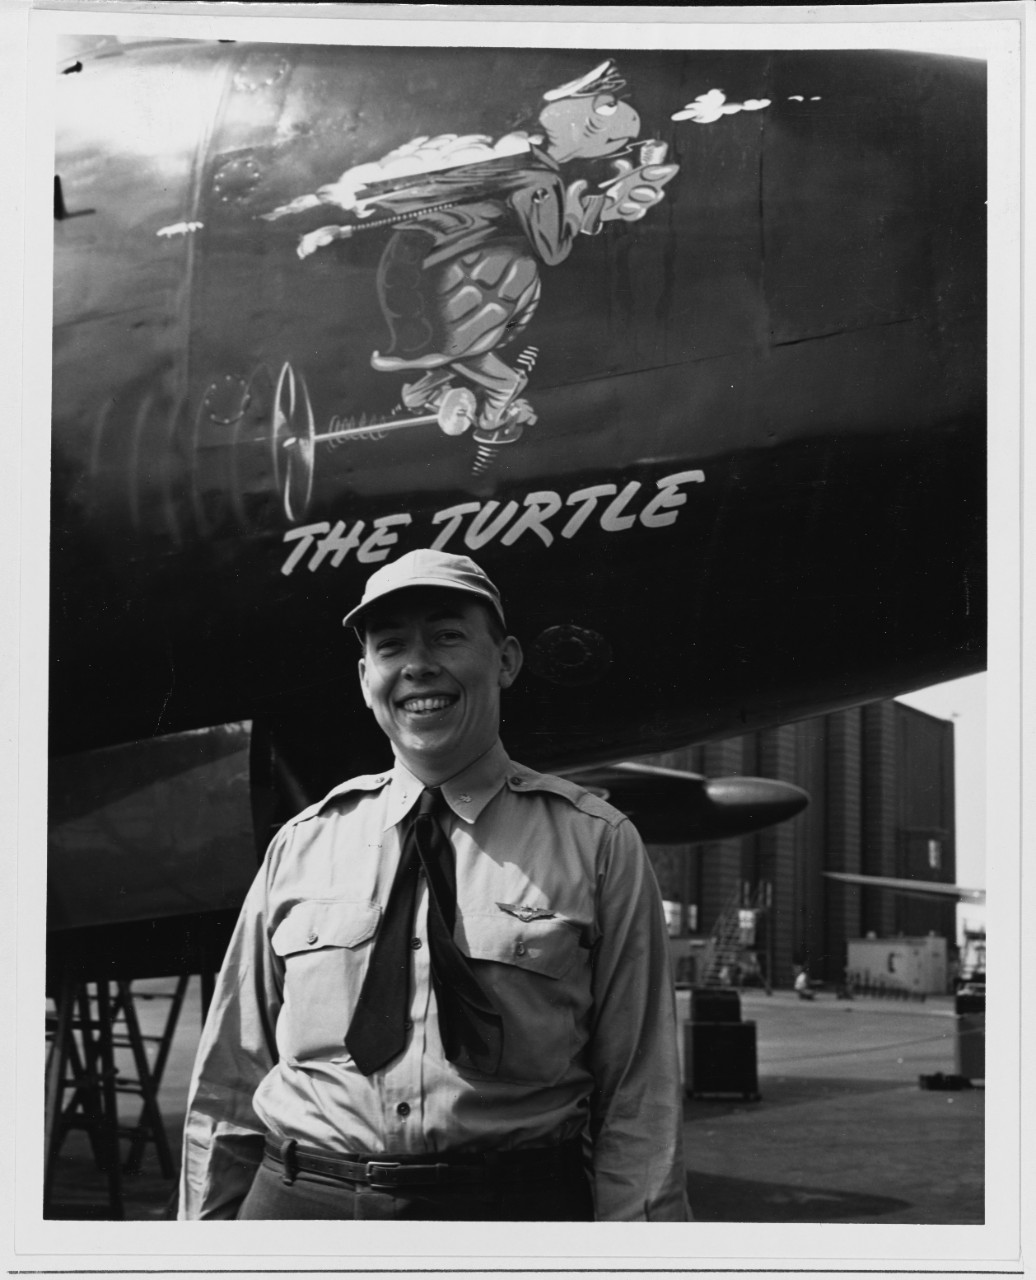 Commander Thomas D. Davis by "The Truculent Turtle," a Lockheed P2V-1 Neptune patrol plane